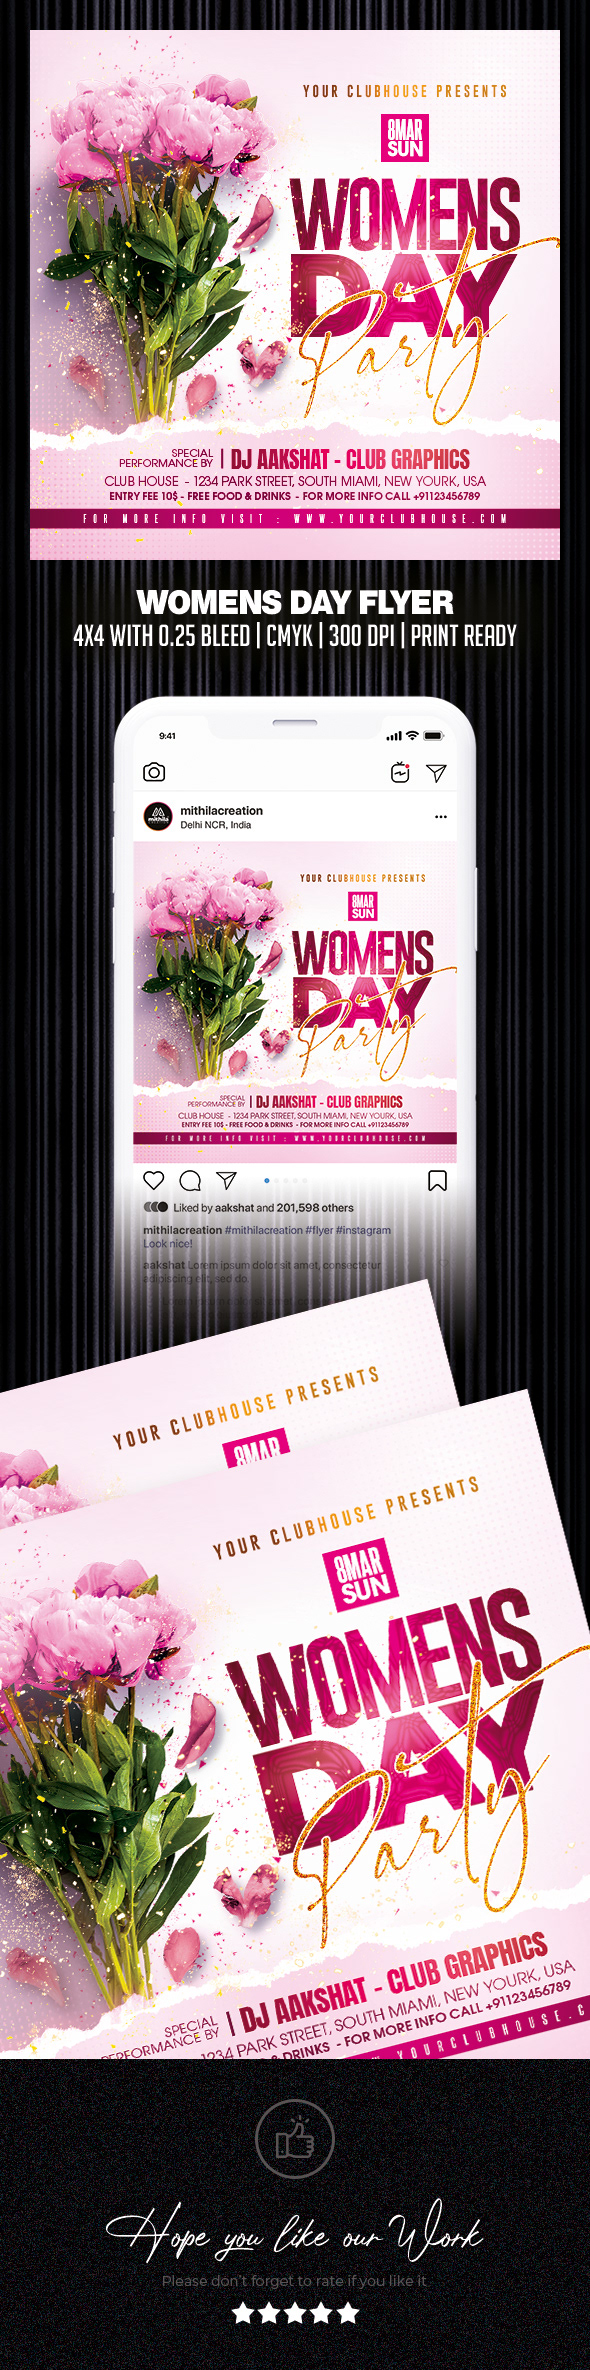 women's day womens day Women day International Women's 8th march International Women's Day Social media post marketing   flyer instagram